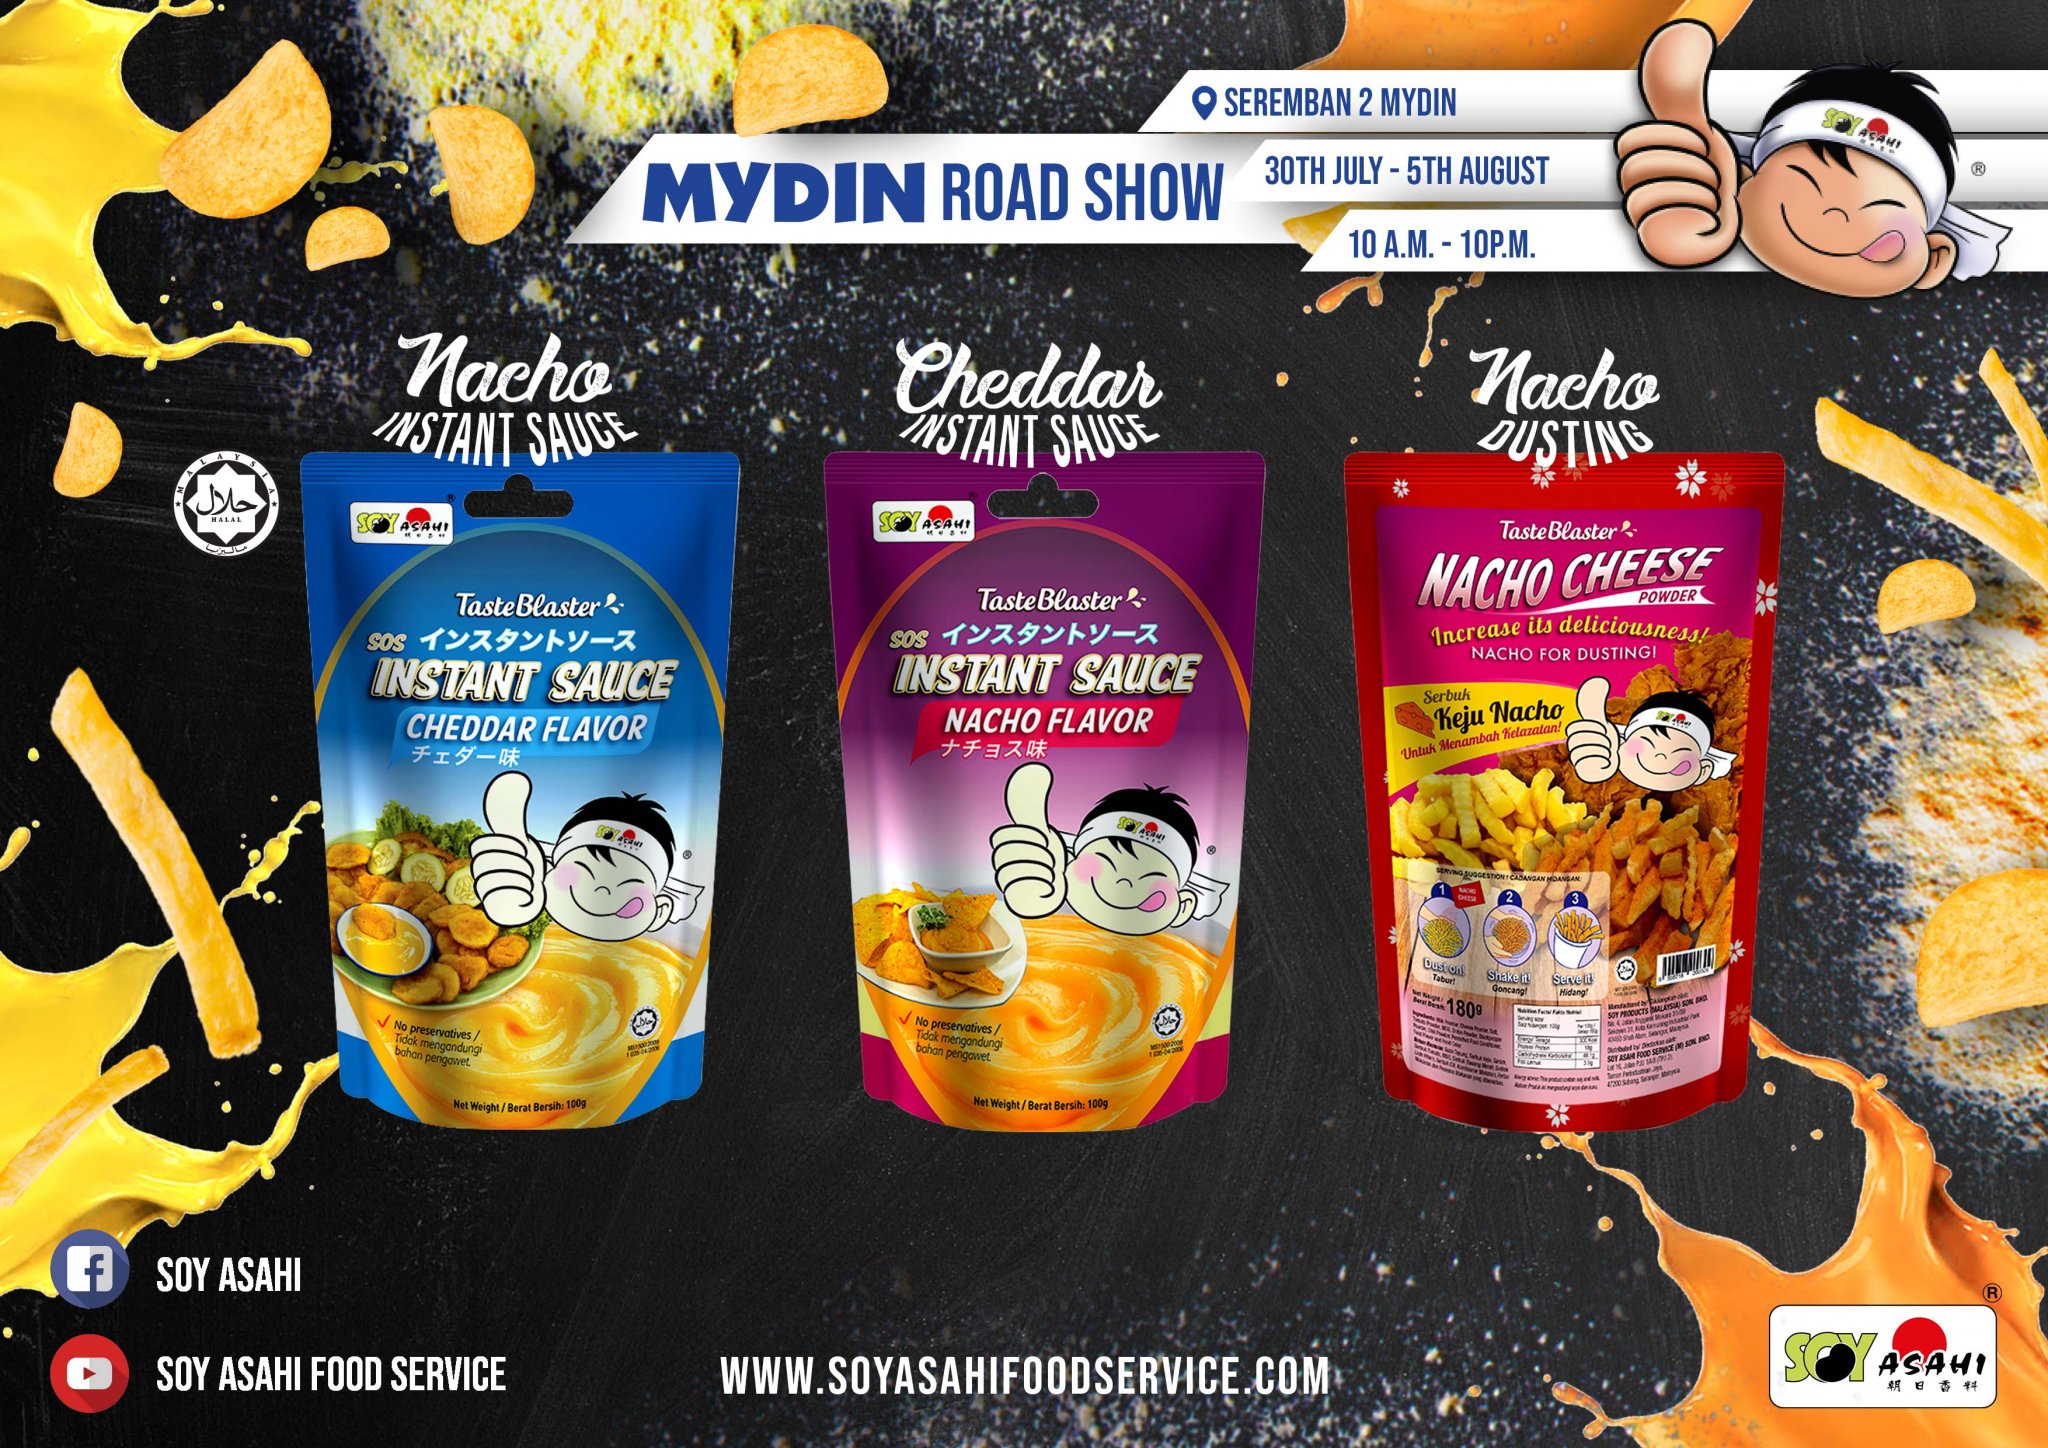 Launching of Nacho Cheese Powder @ MYDIN SEREMBAN 2  (30th July – 5th August 2018)